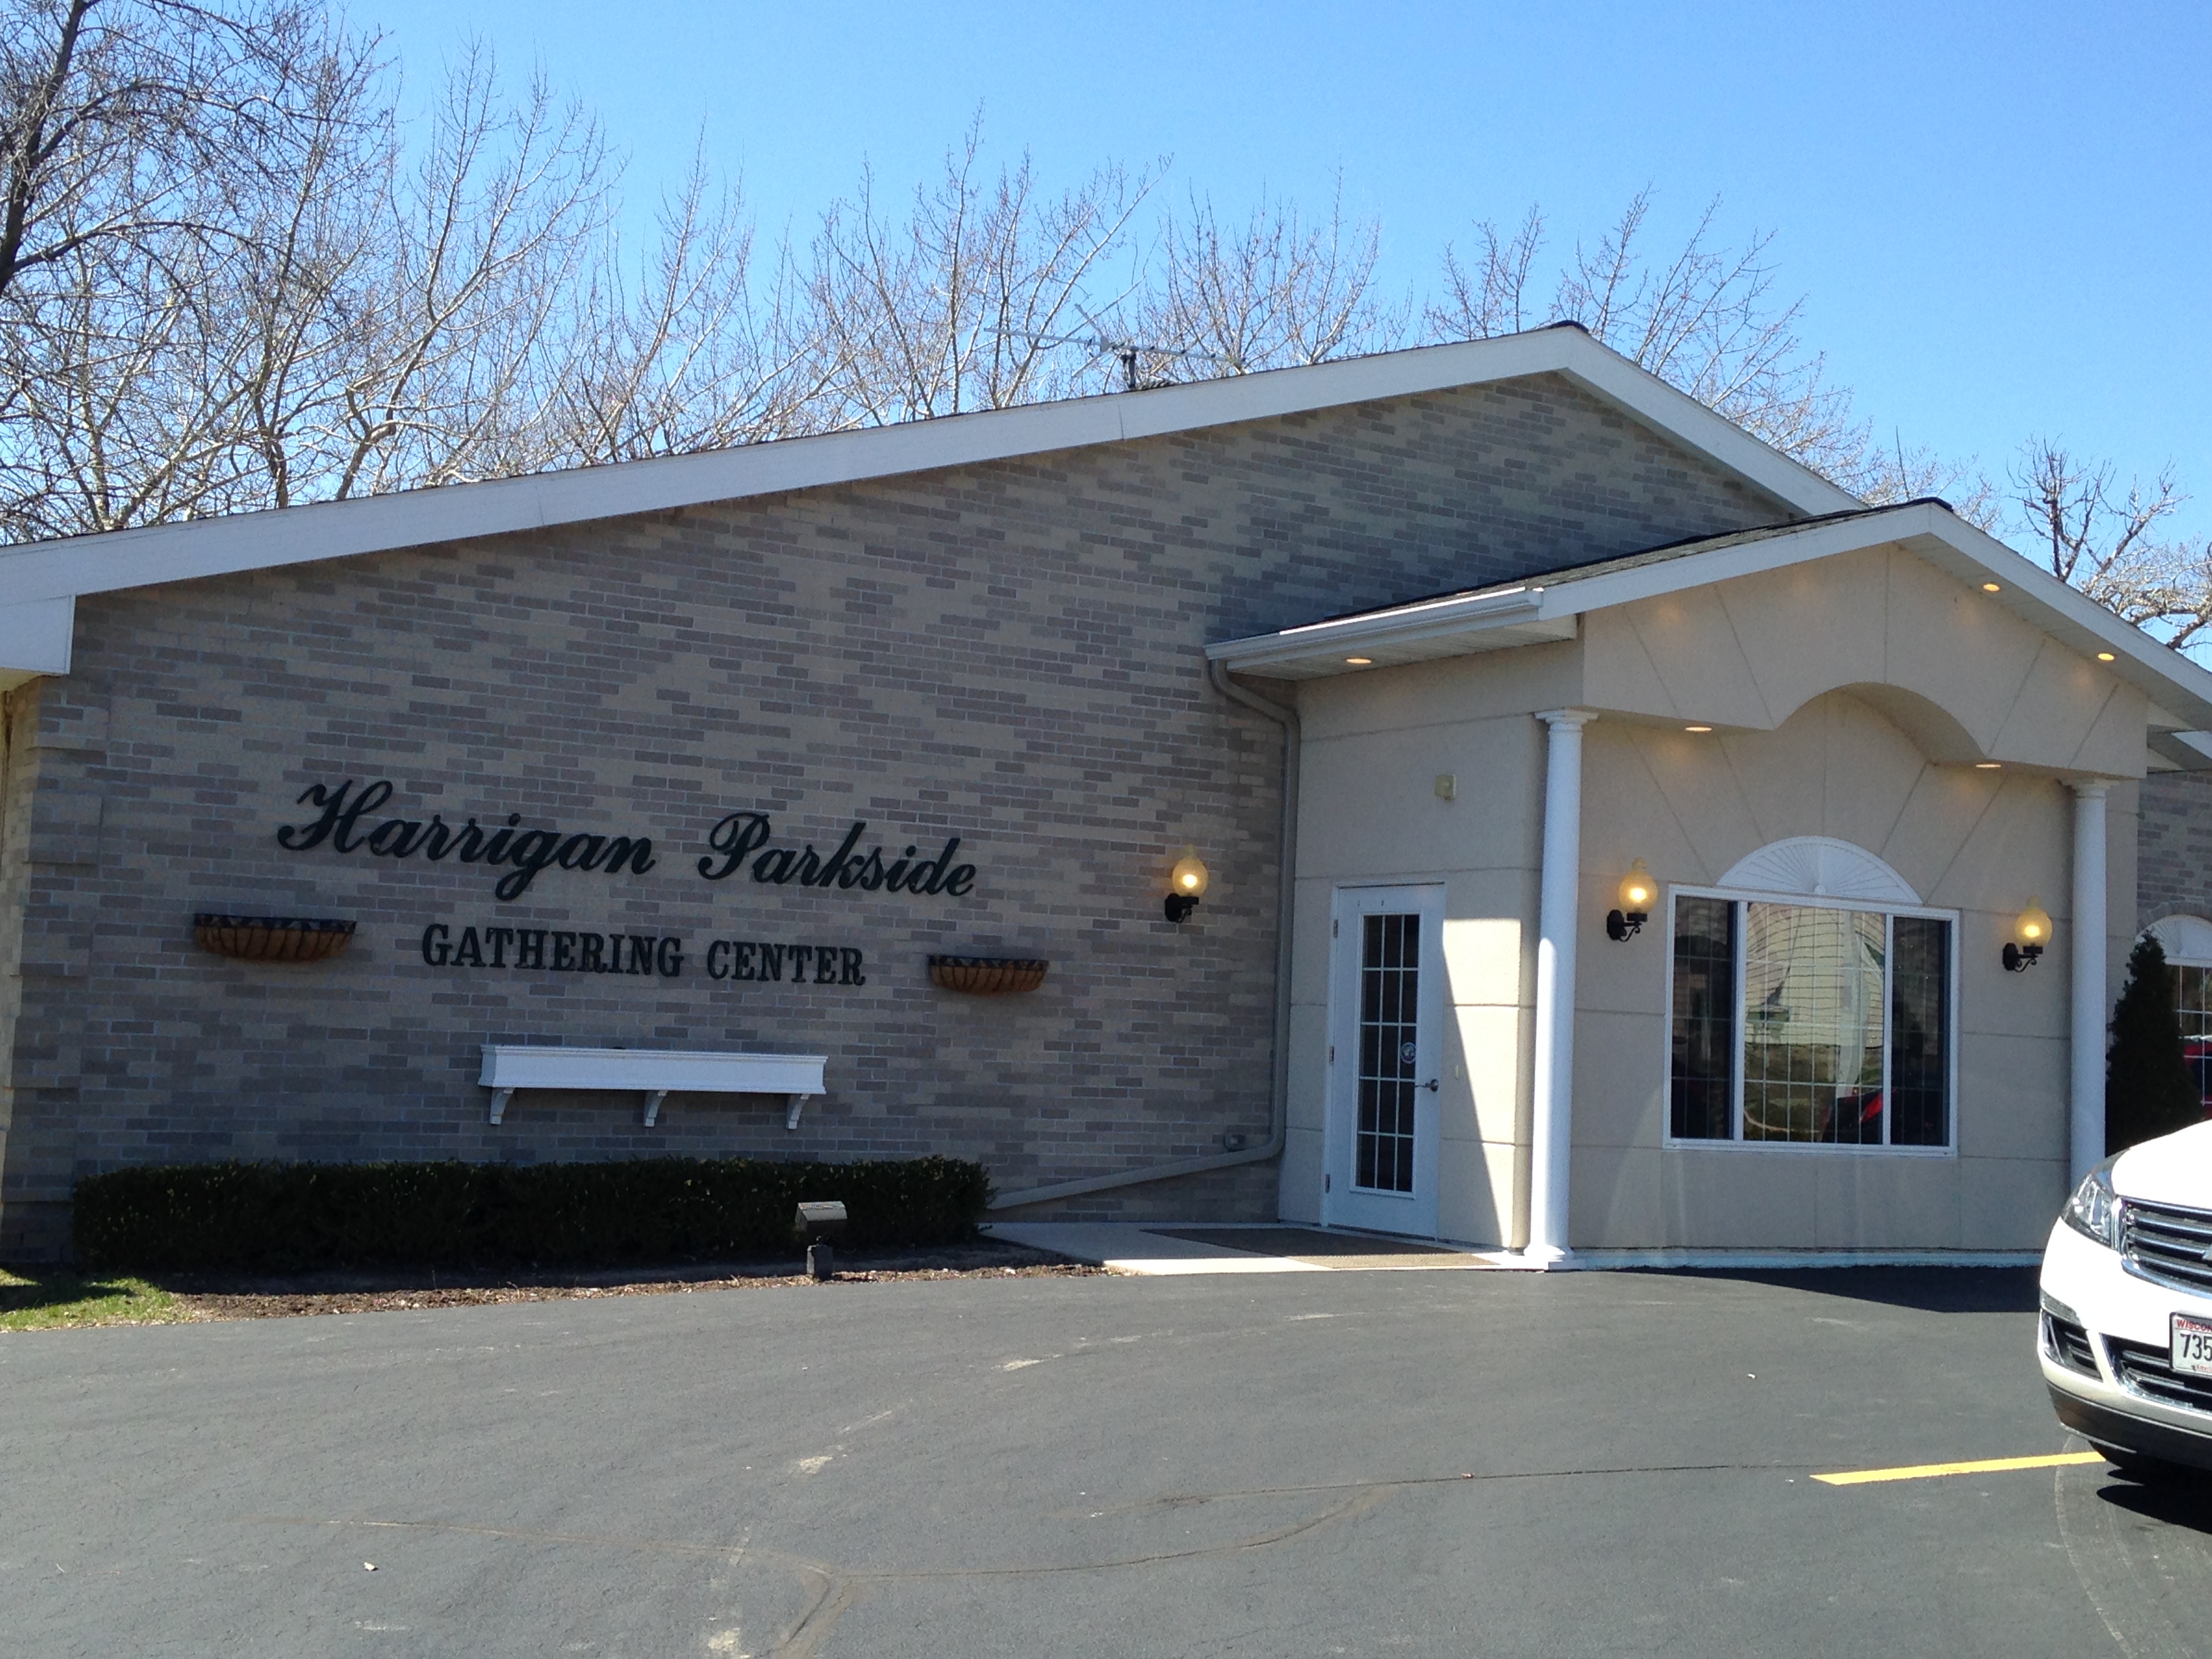 Harrigan Parkside Gathering Center | Broken Plate Catering Partner, Manitowoc Wisconsin